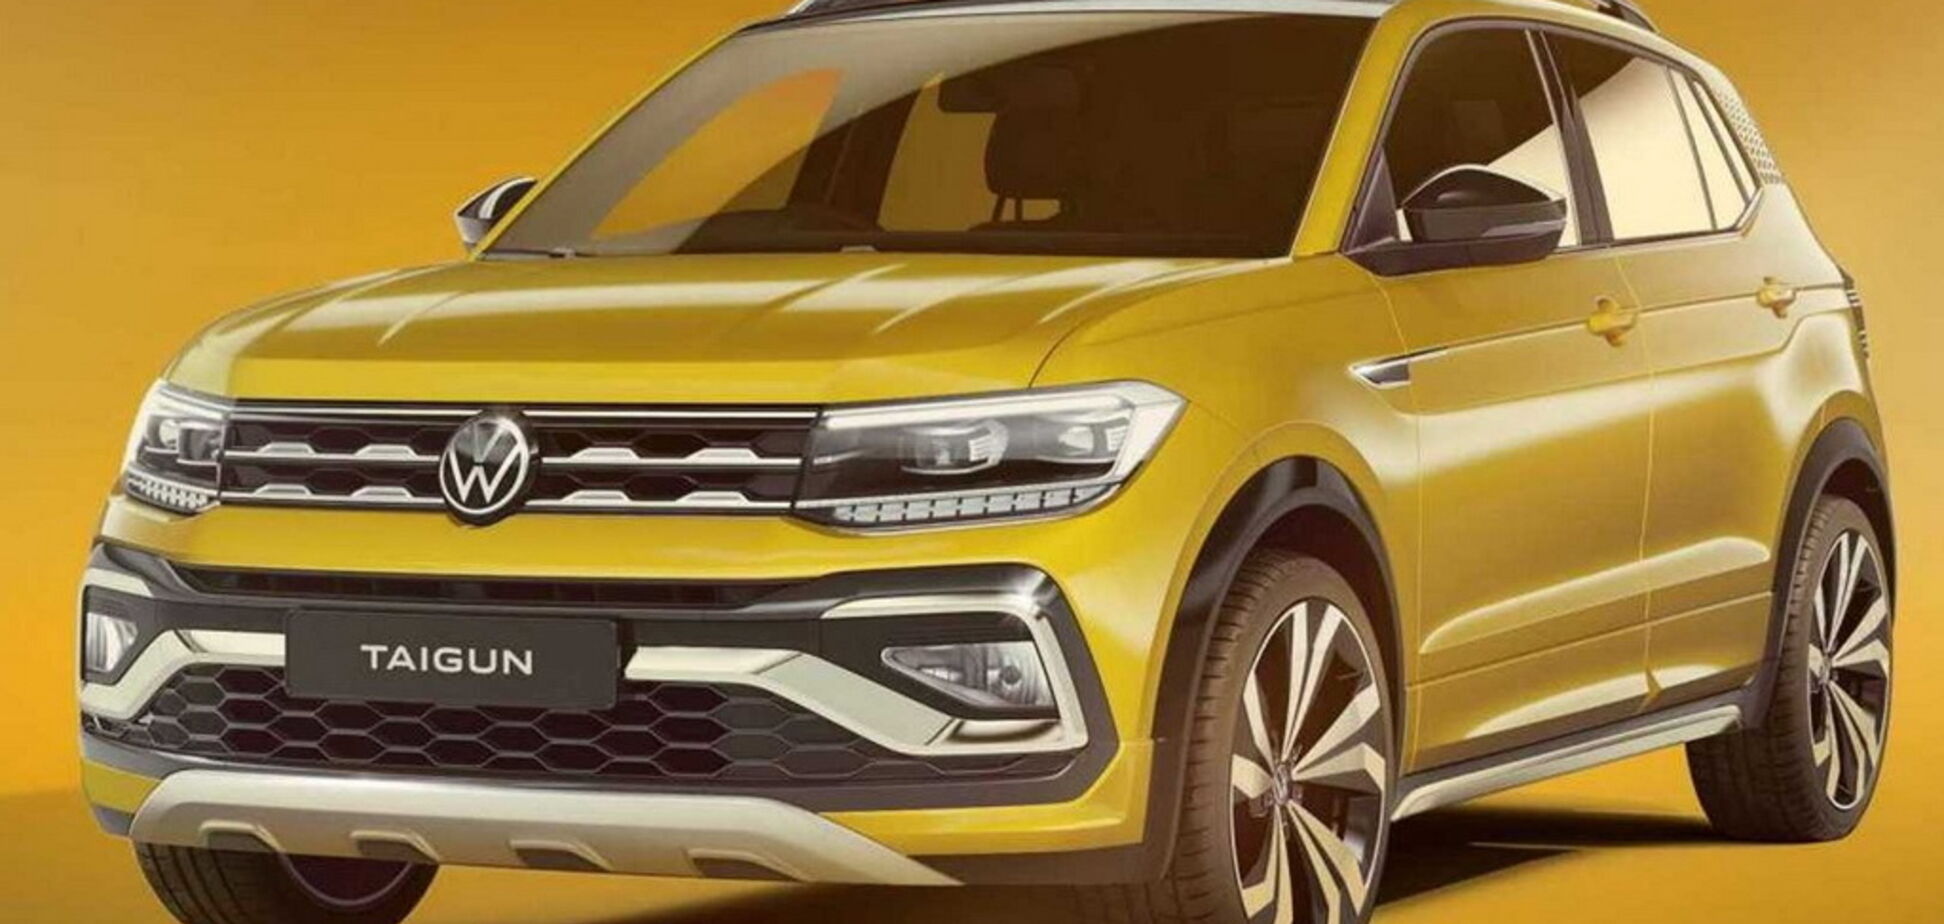 Cуперник Renault Duster: Volkswagen показав бюджетний кросовер